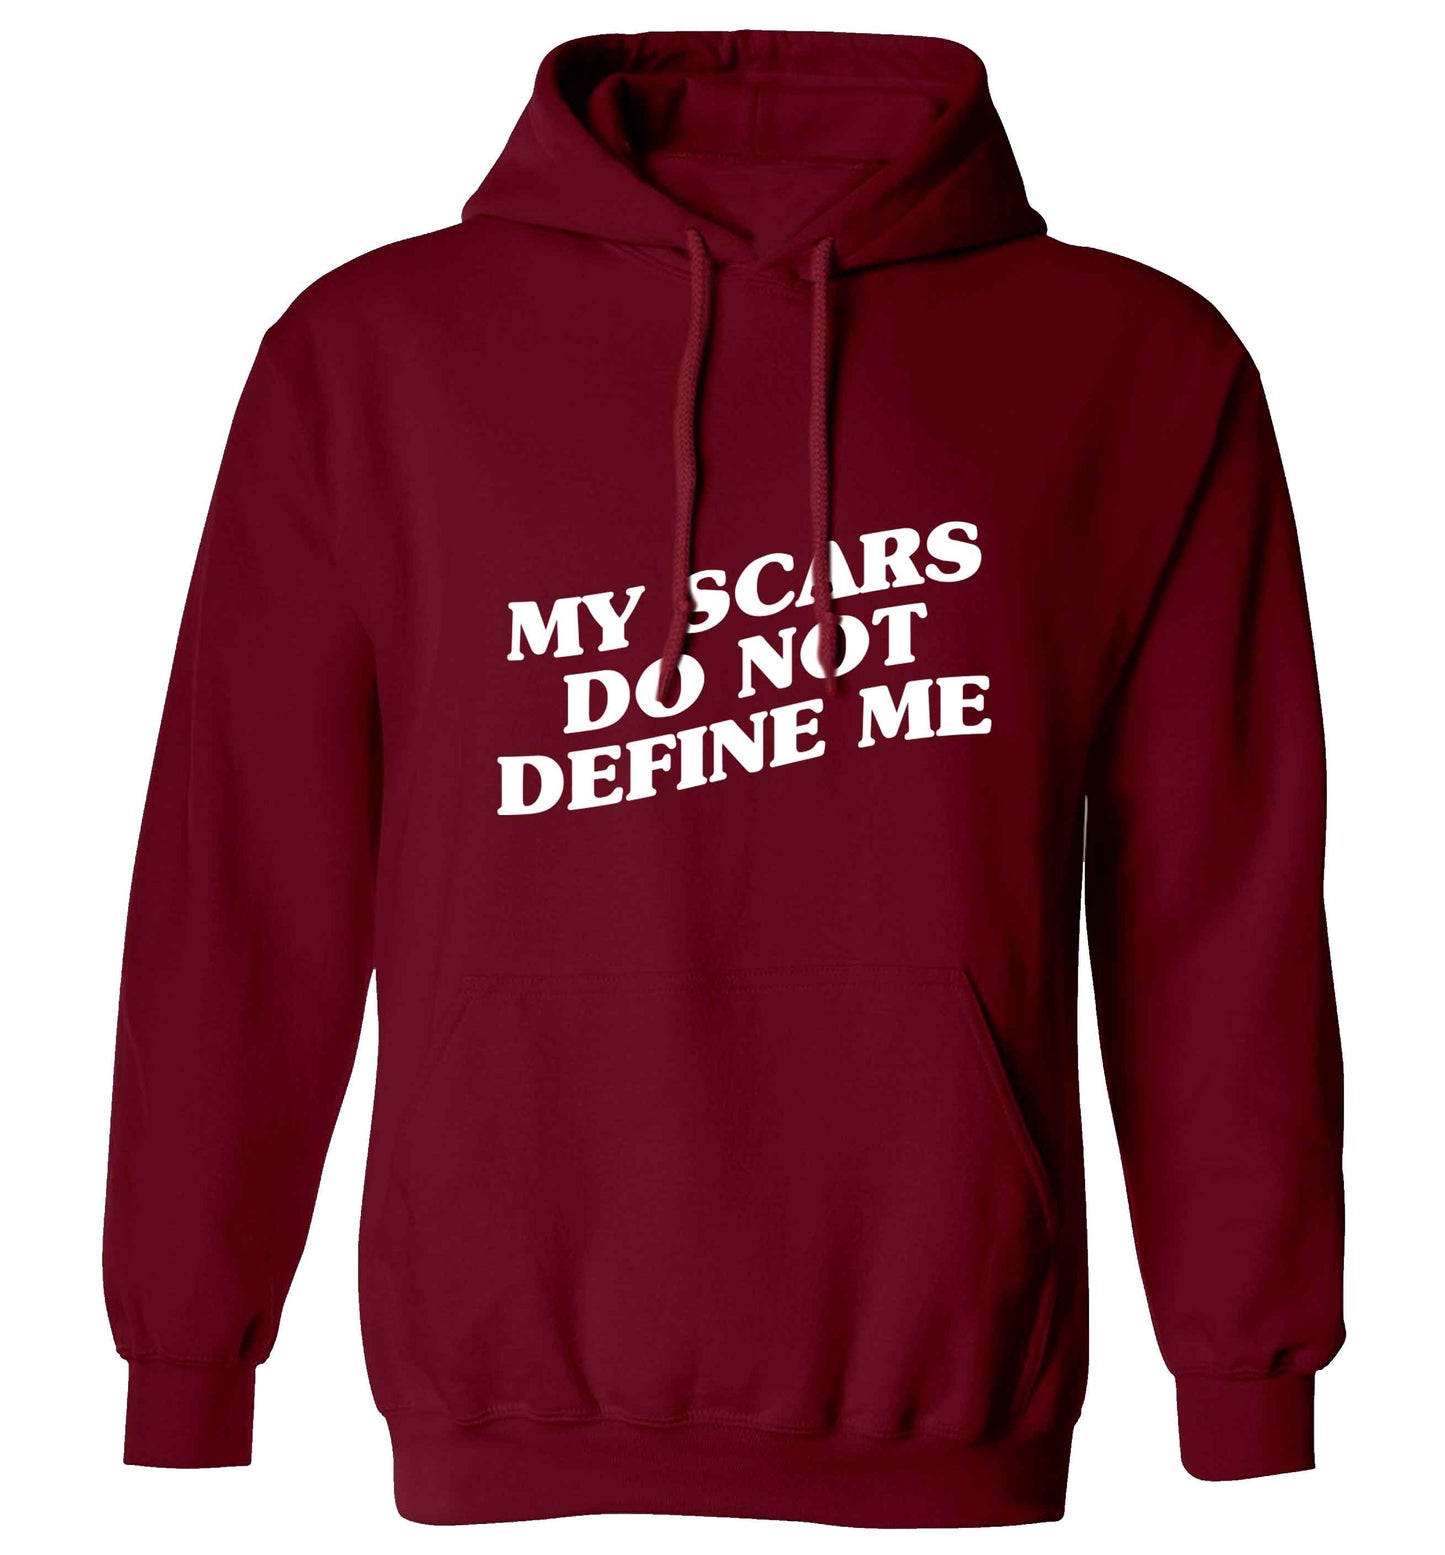 My scars do not define me adults unisex maroon hoodie 2XL